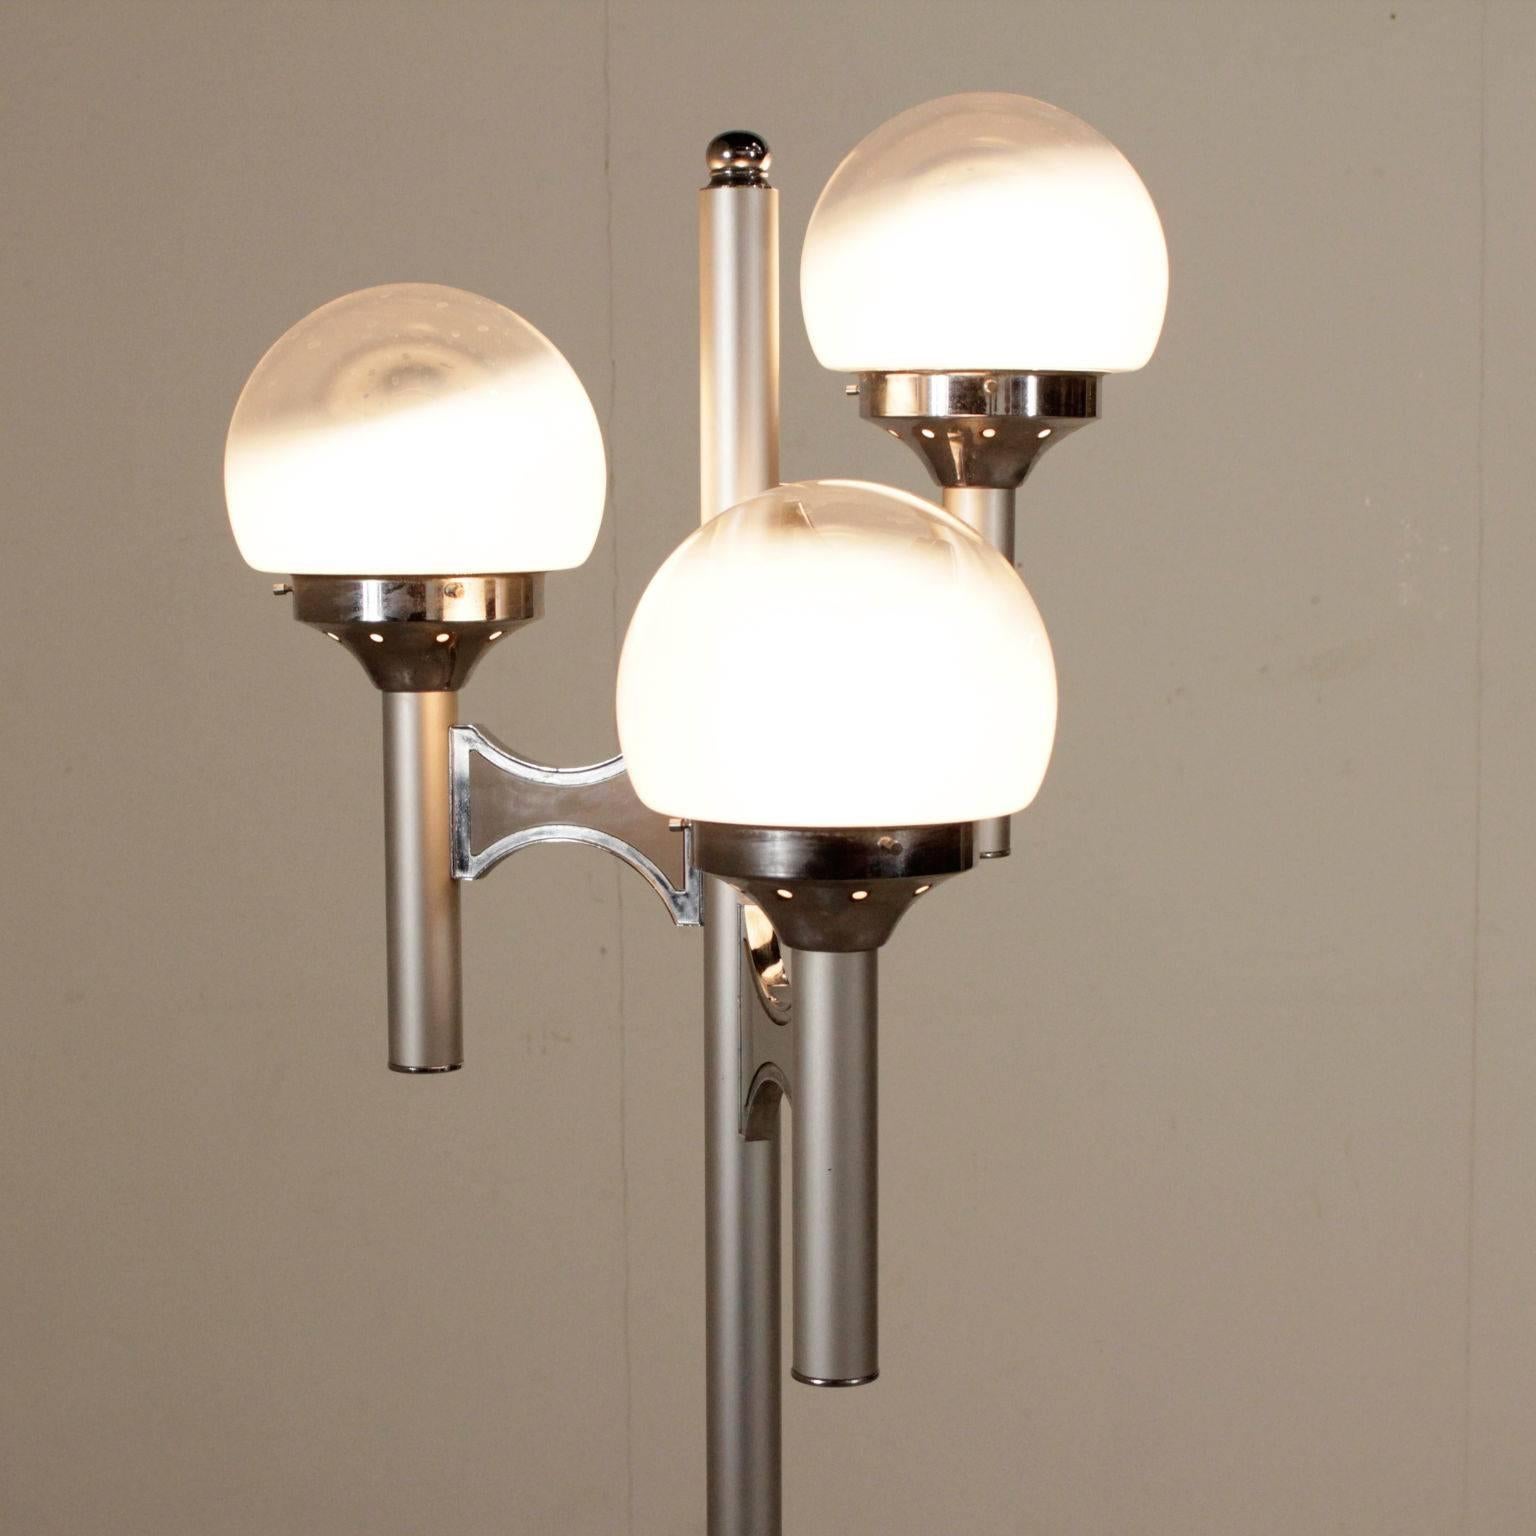 Mid-Century Modern Floor Lamp Aluminium Metal Glass Vintage Manufactured in Italy, 1960s-1970s